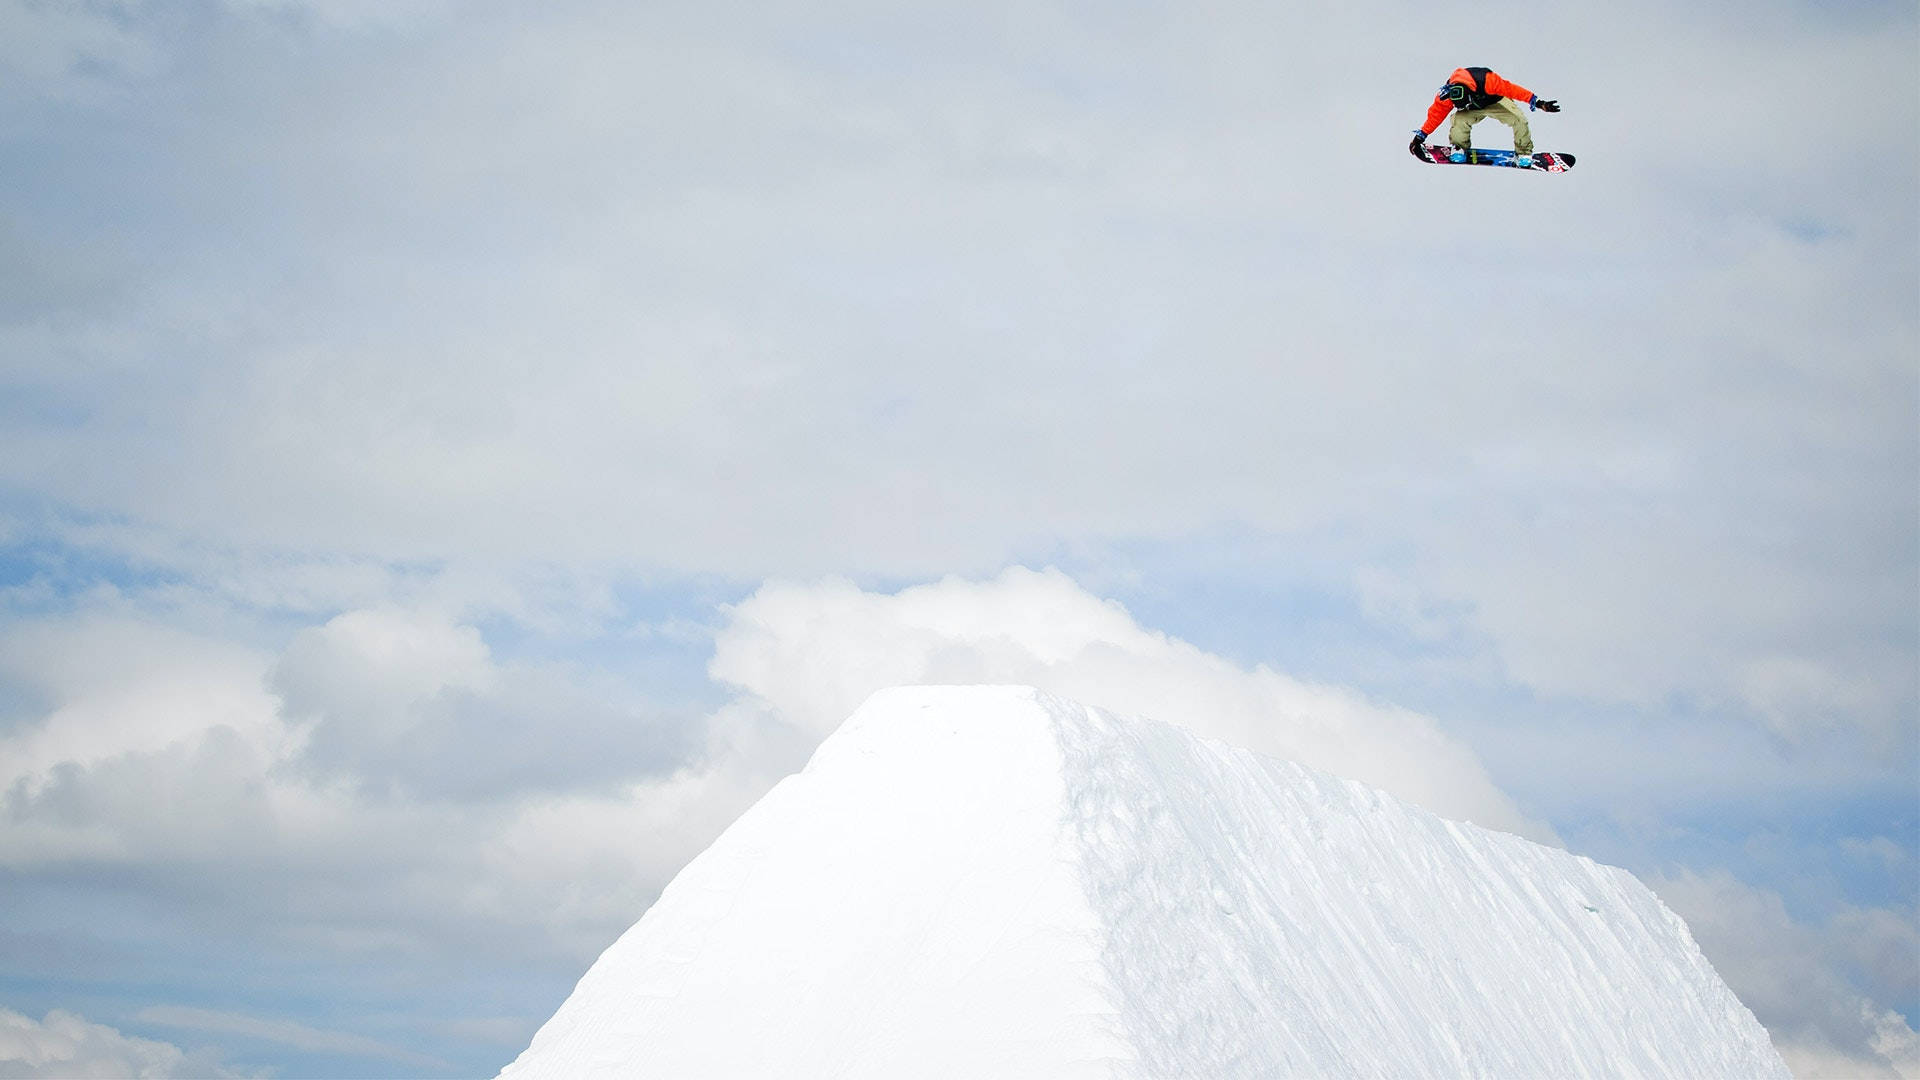 Snowboardingim Himmel Wallpaper